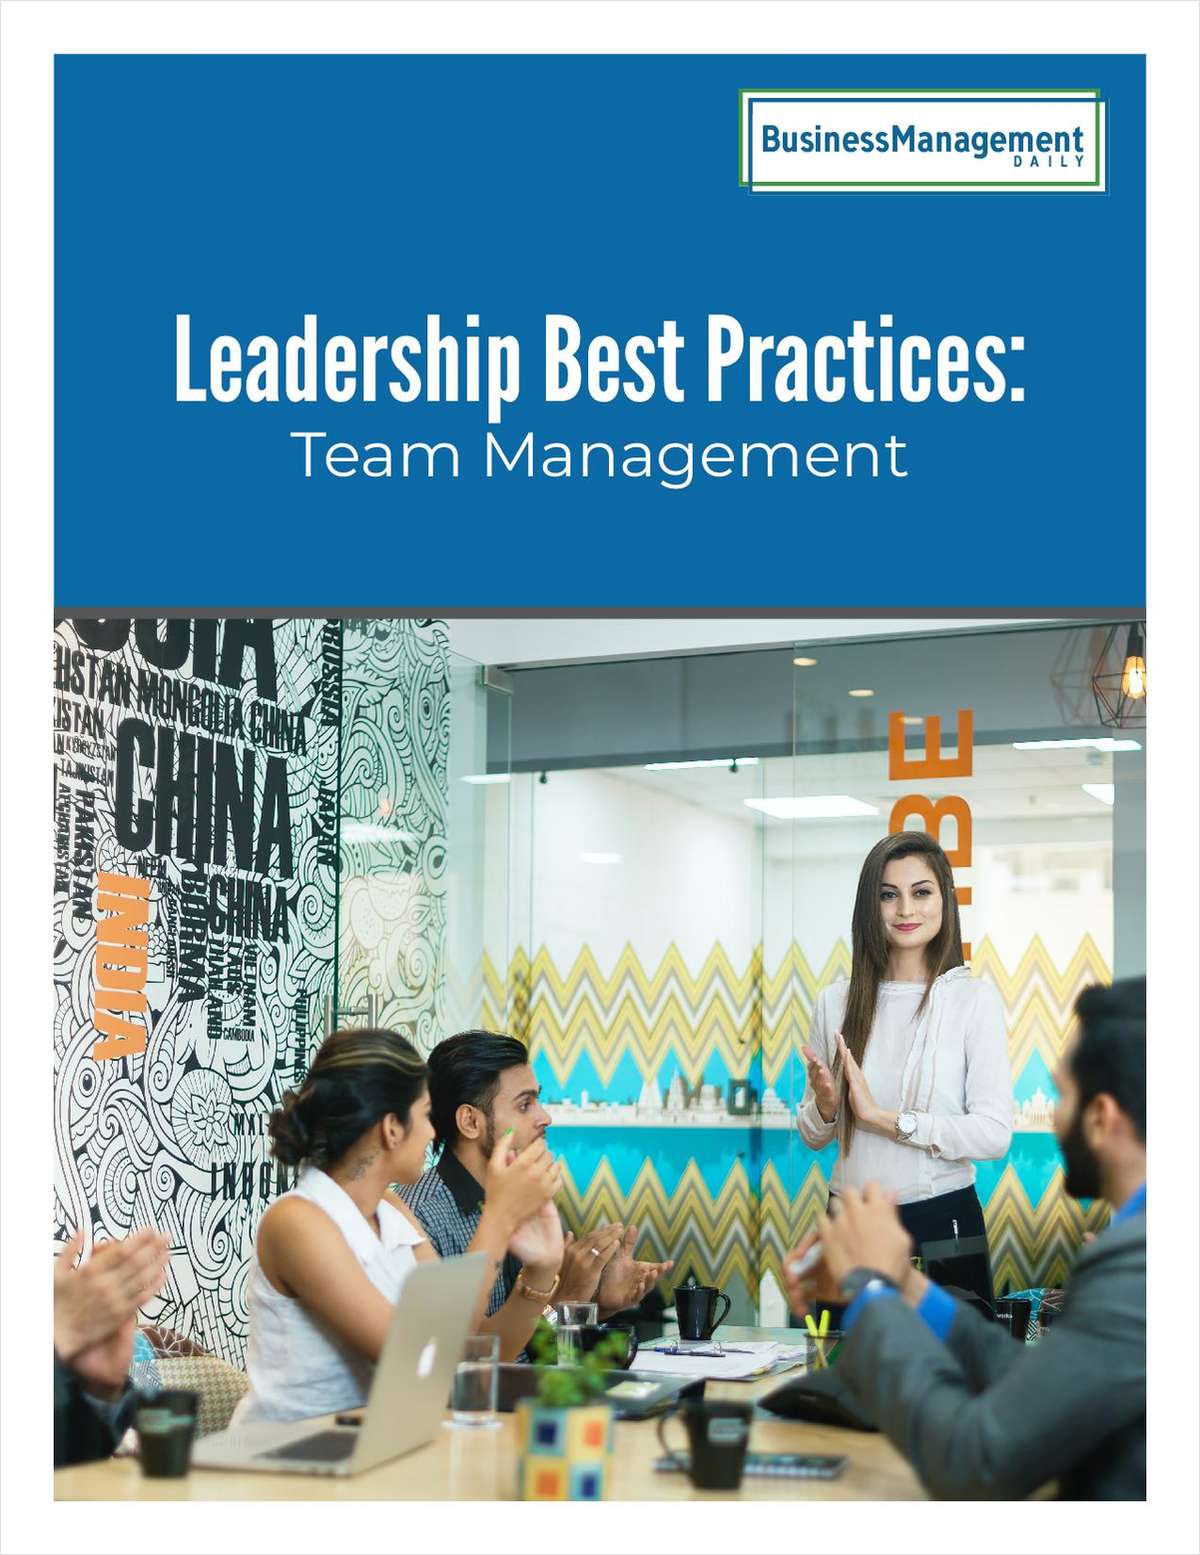 Leadership Best Practices: Team Management